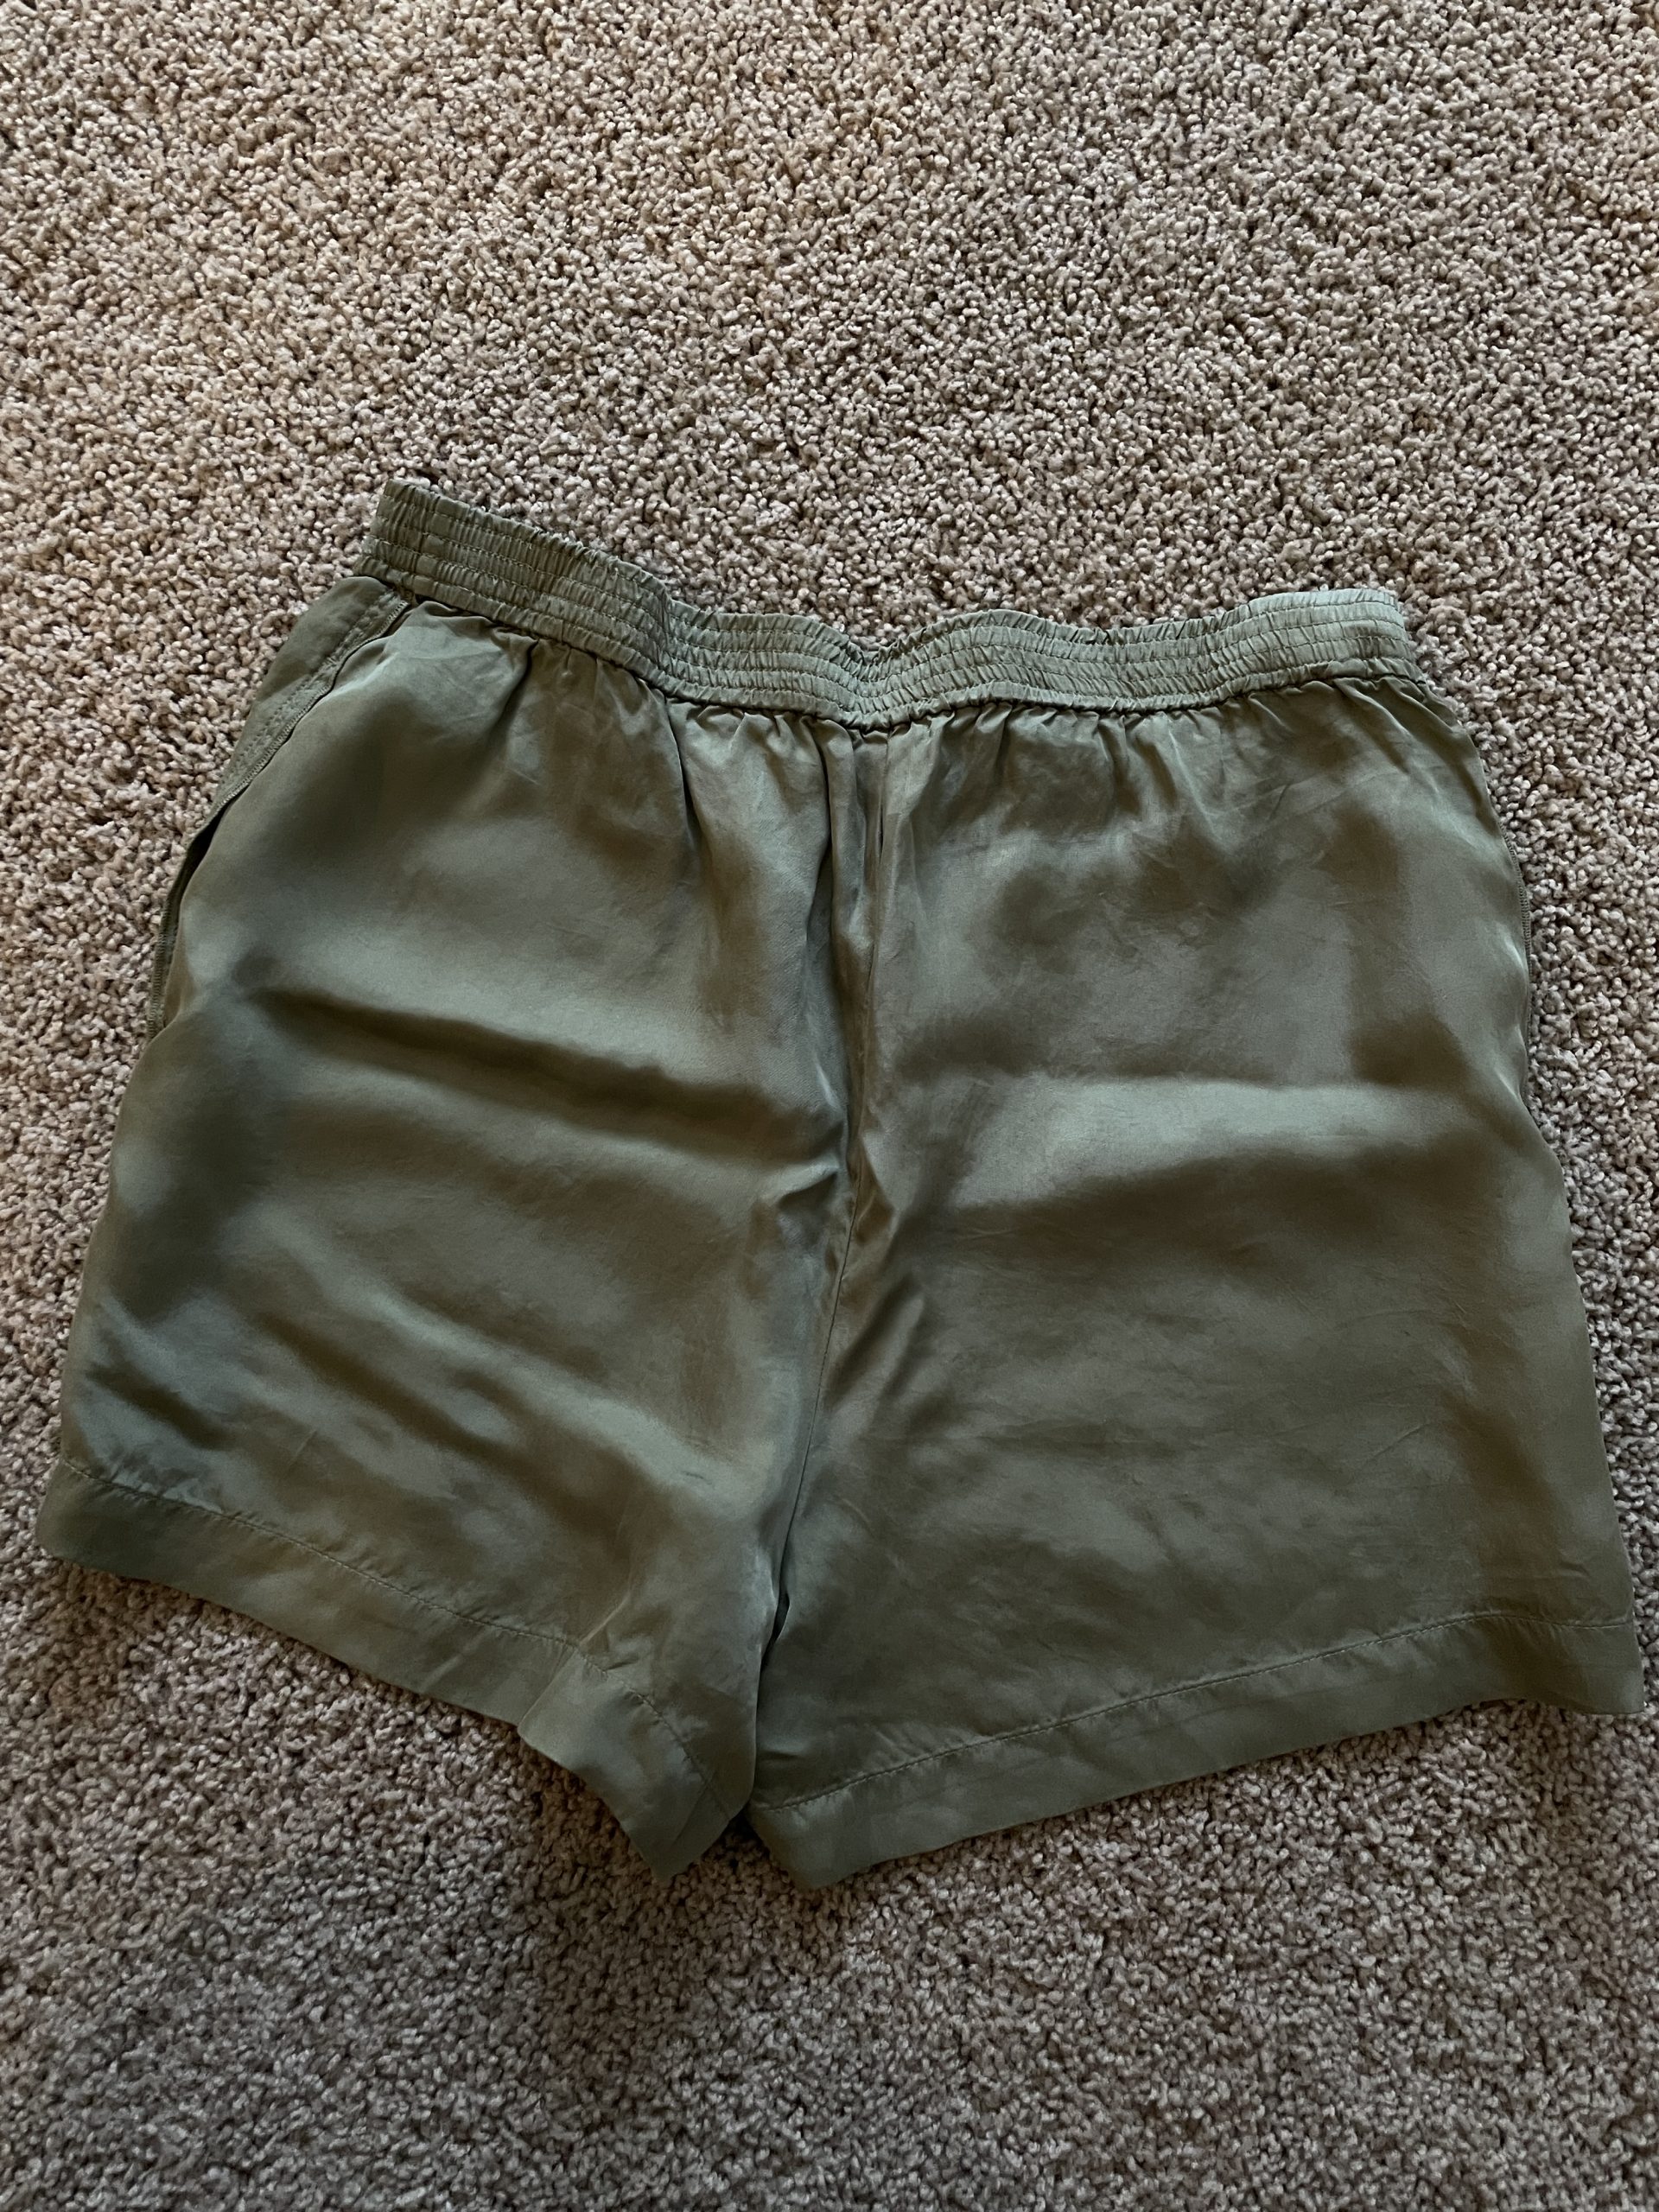 Green silky shorts – Shop Bryci – Memorabilia, Merch, and Original Artwork